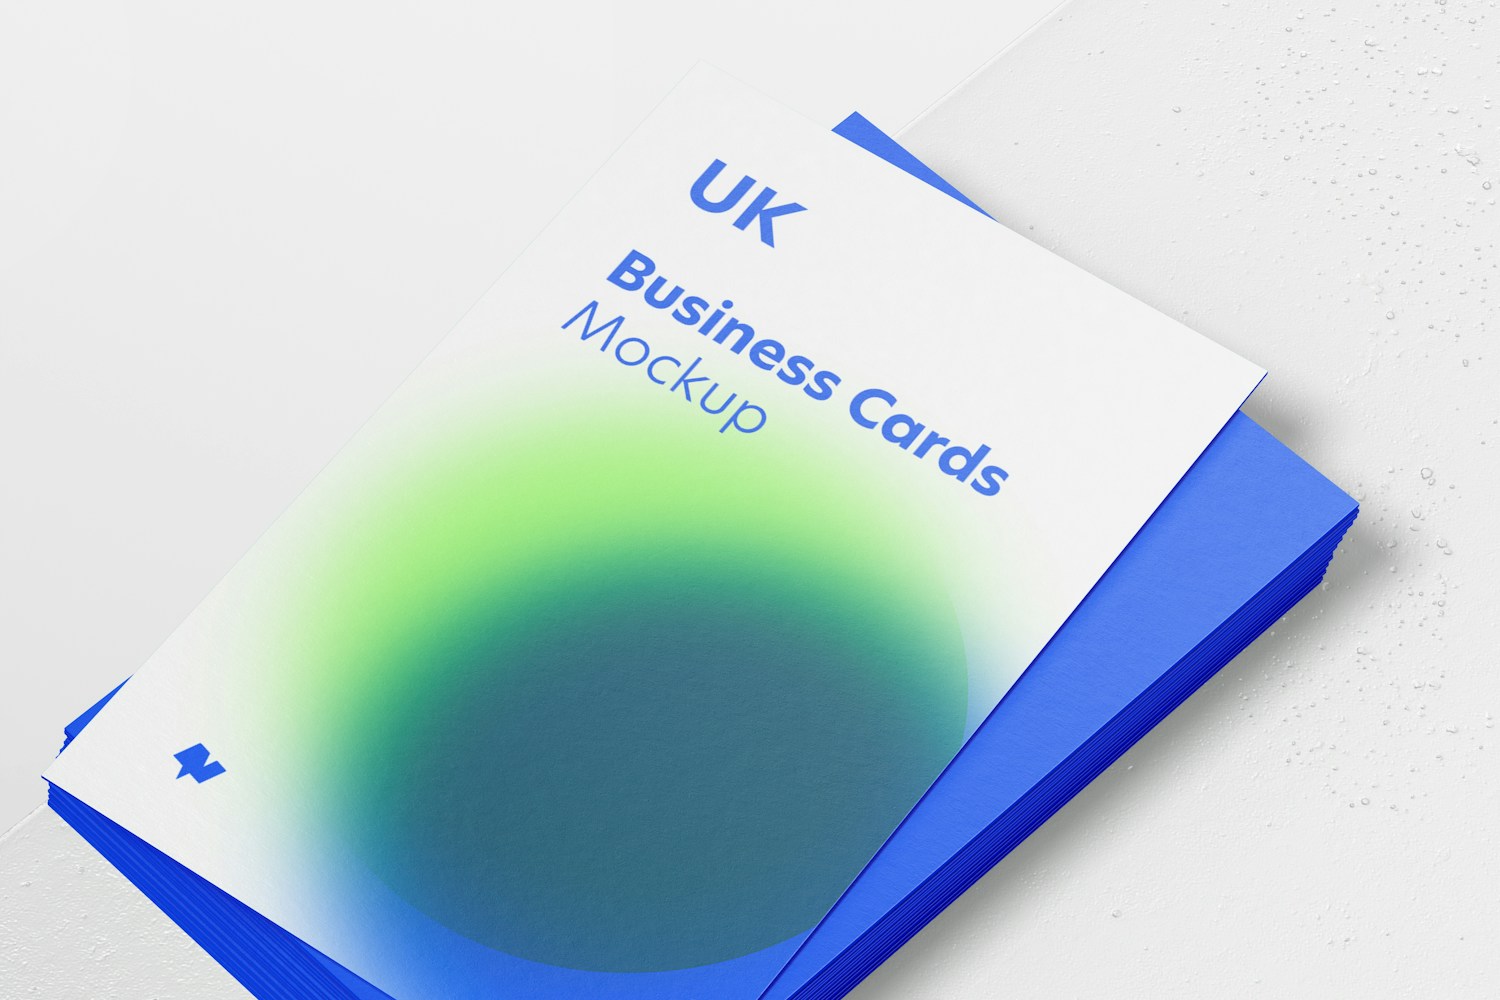 UK Portrait Business Cards Mockup, Close Up